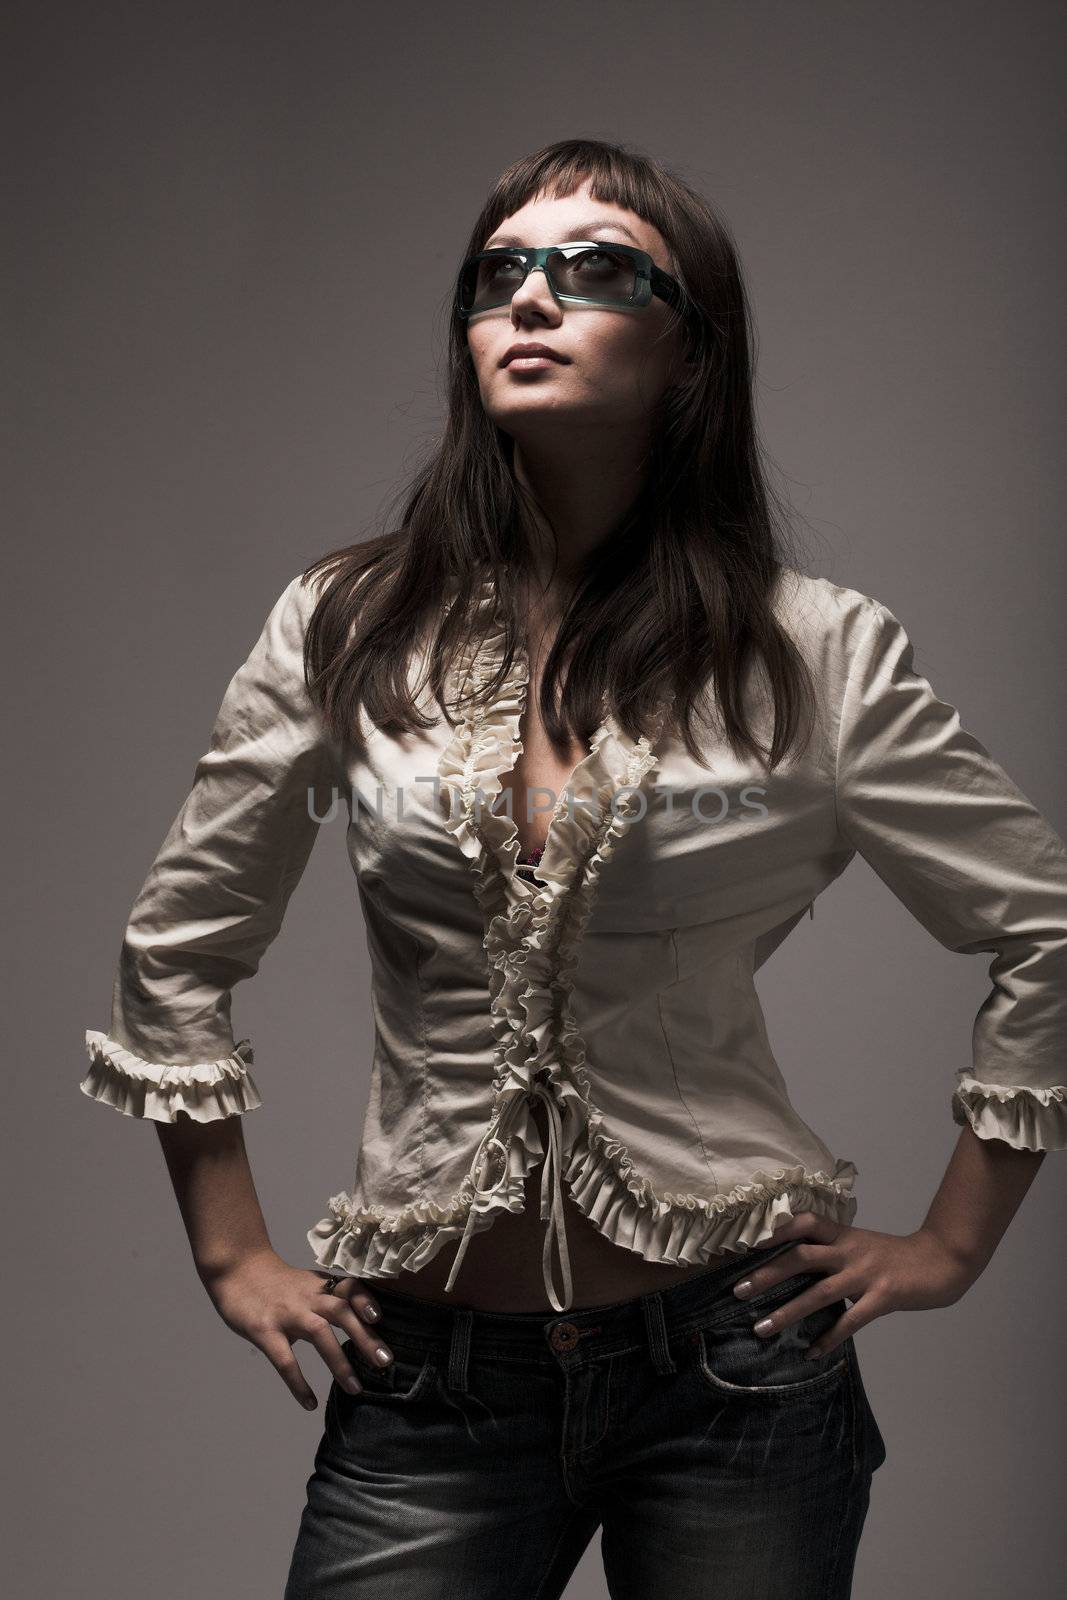 fashion woman portrait wearing sunglasses by Cheschhh